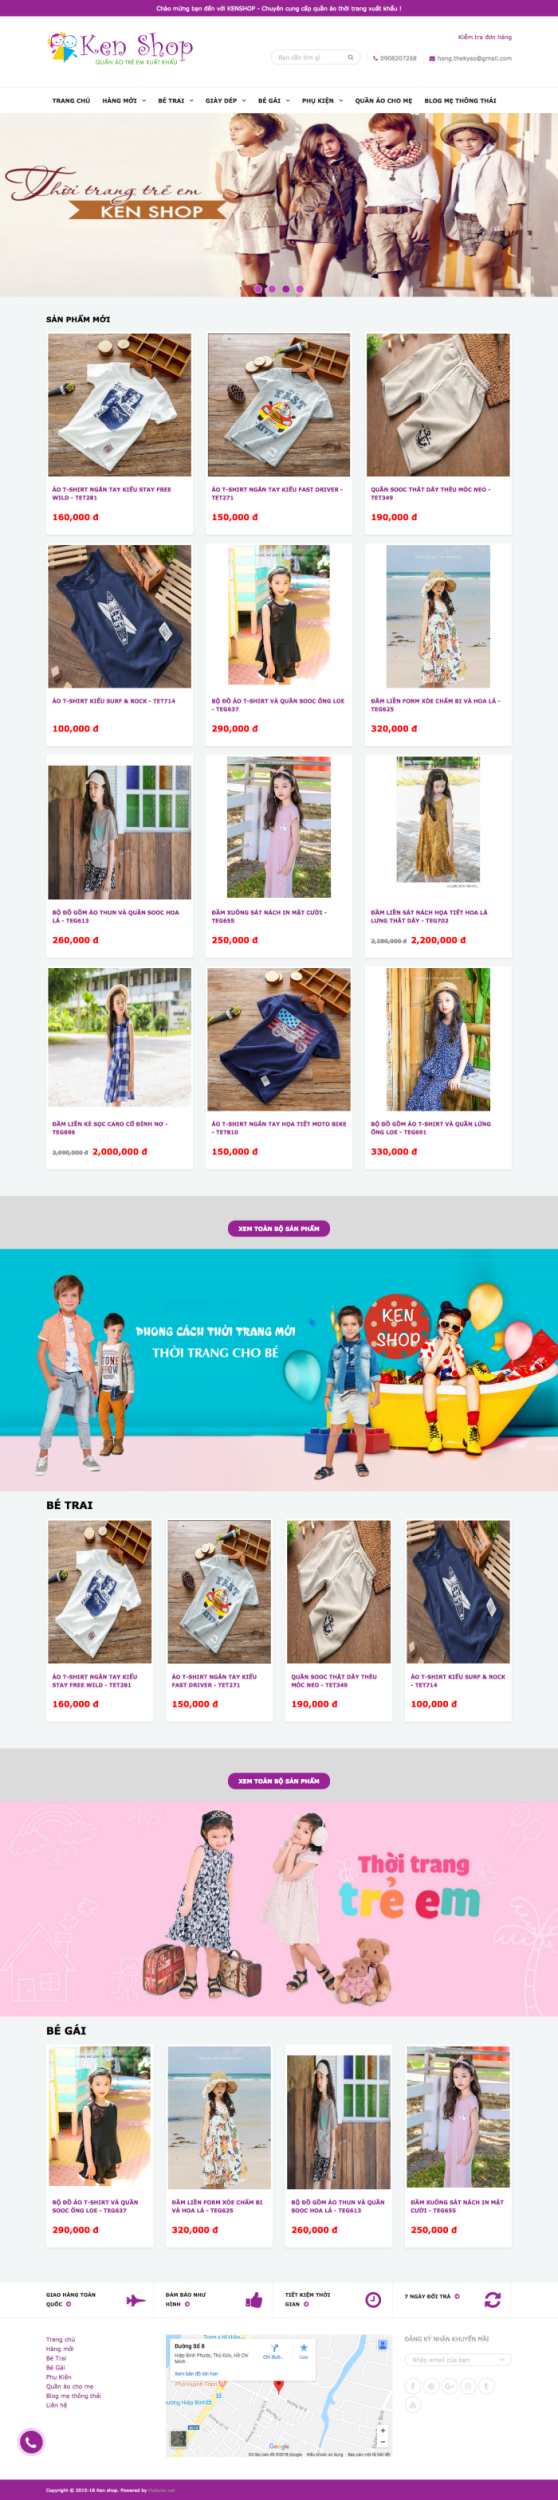 Thiết kế website thời trang trẻ em